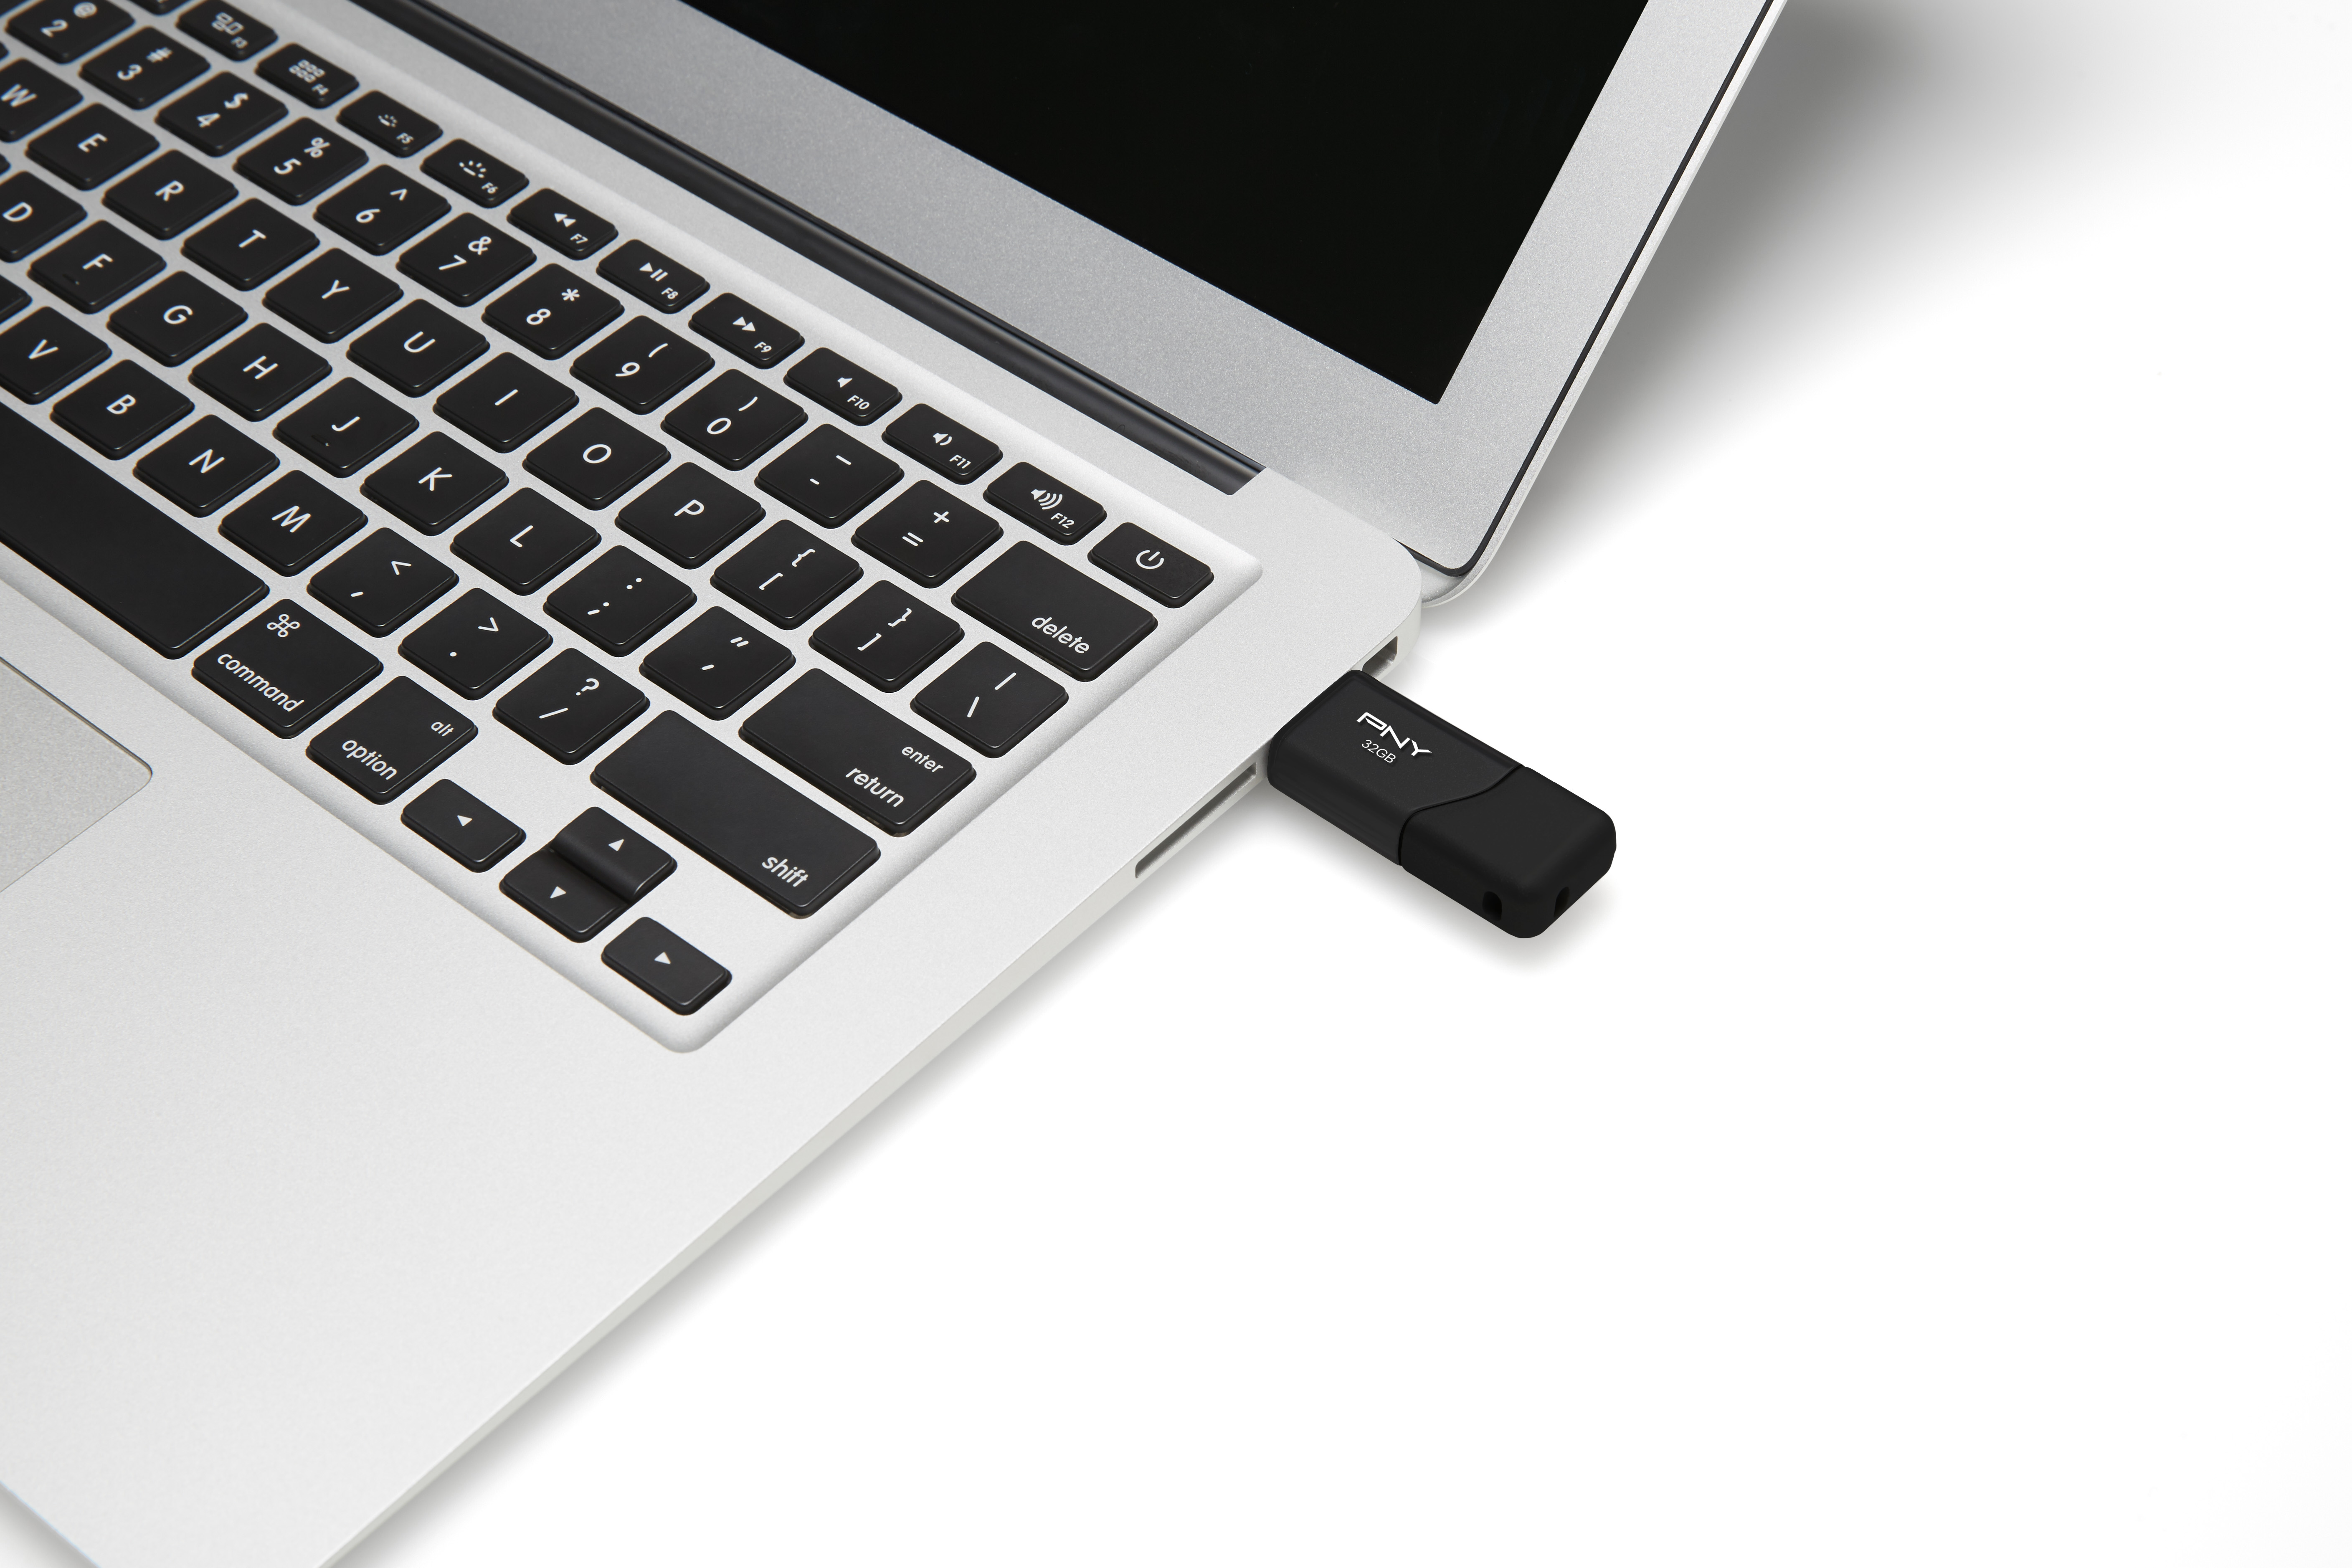 PNY 32GB Attache USB 2.0 Flash Drive - P-FD32GATT03-GE - image 5 of 6